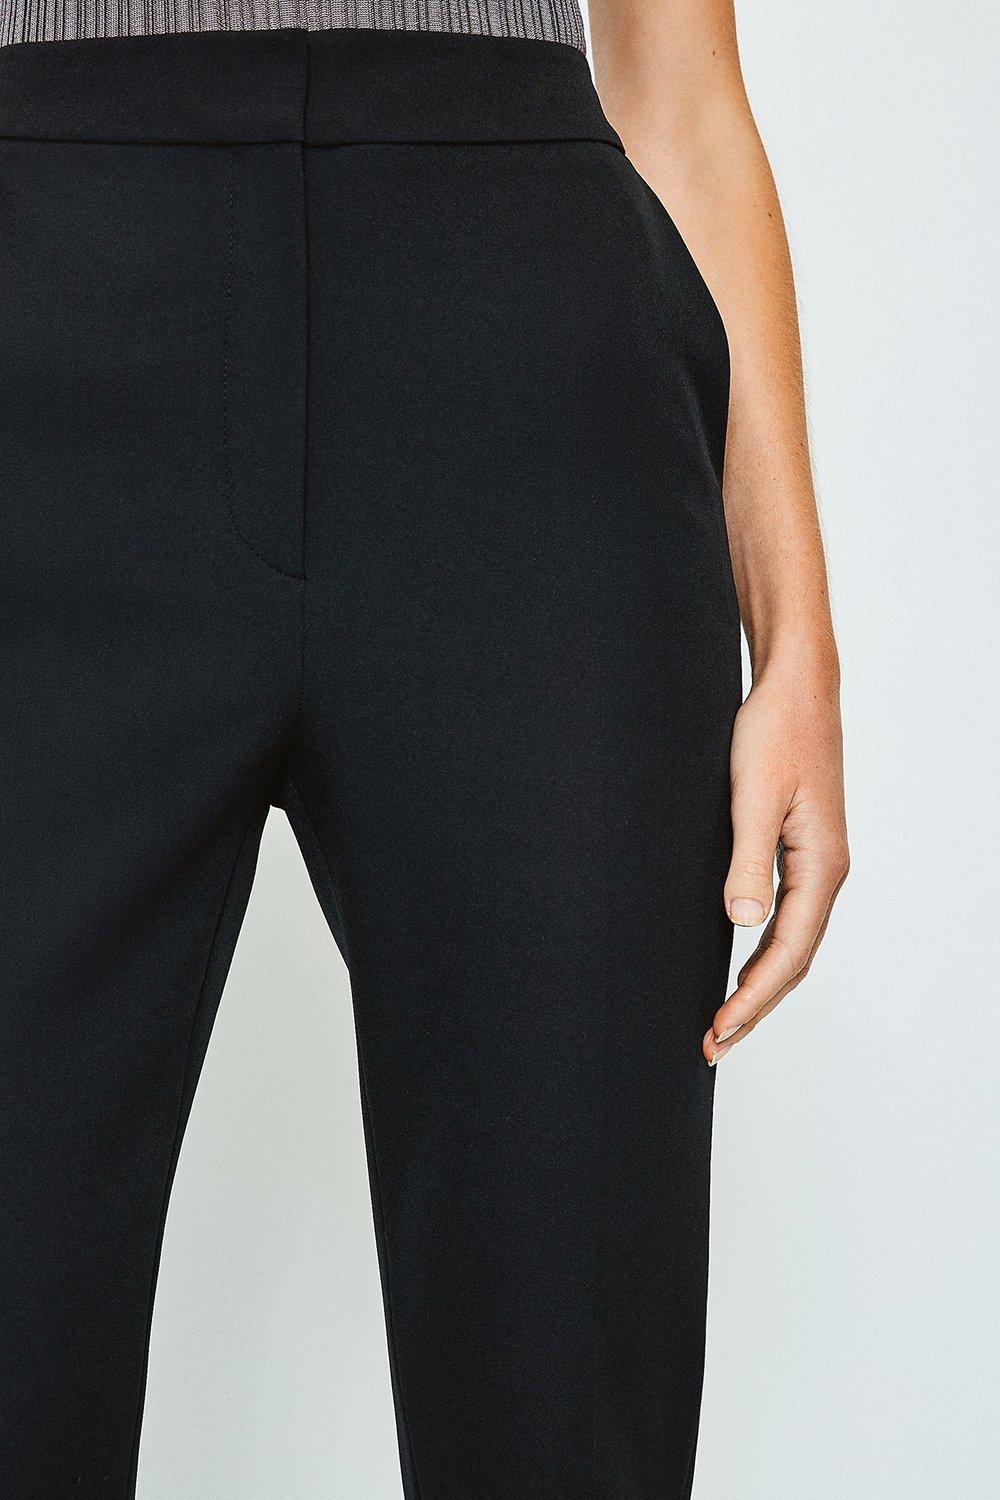 black skinny stretch trousers